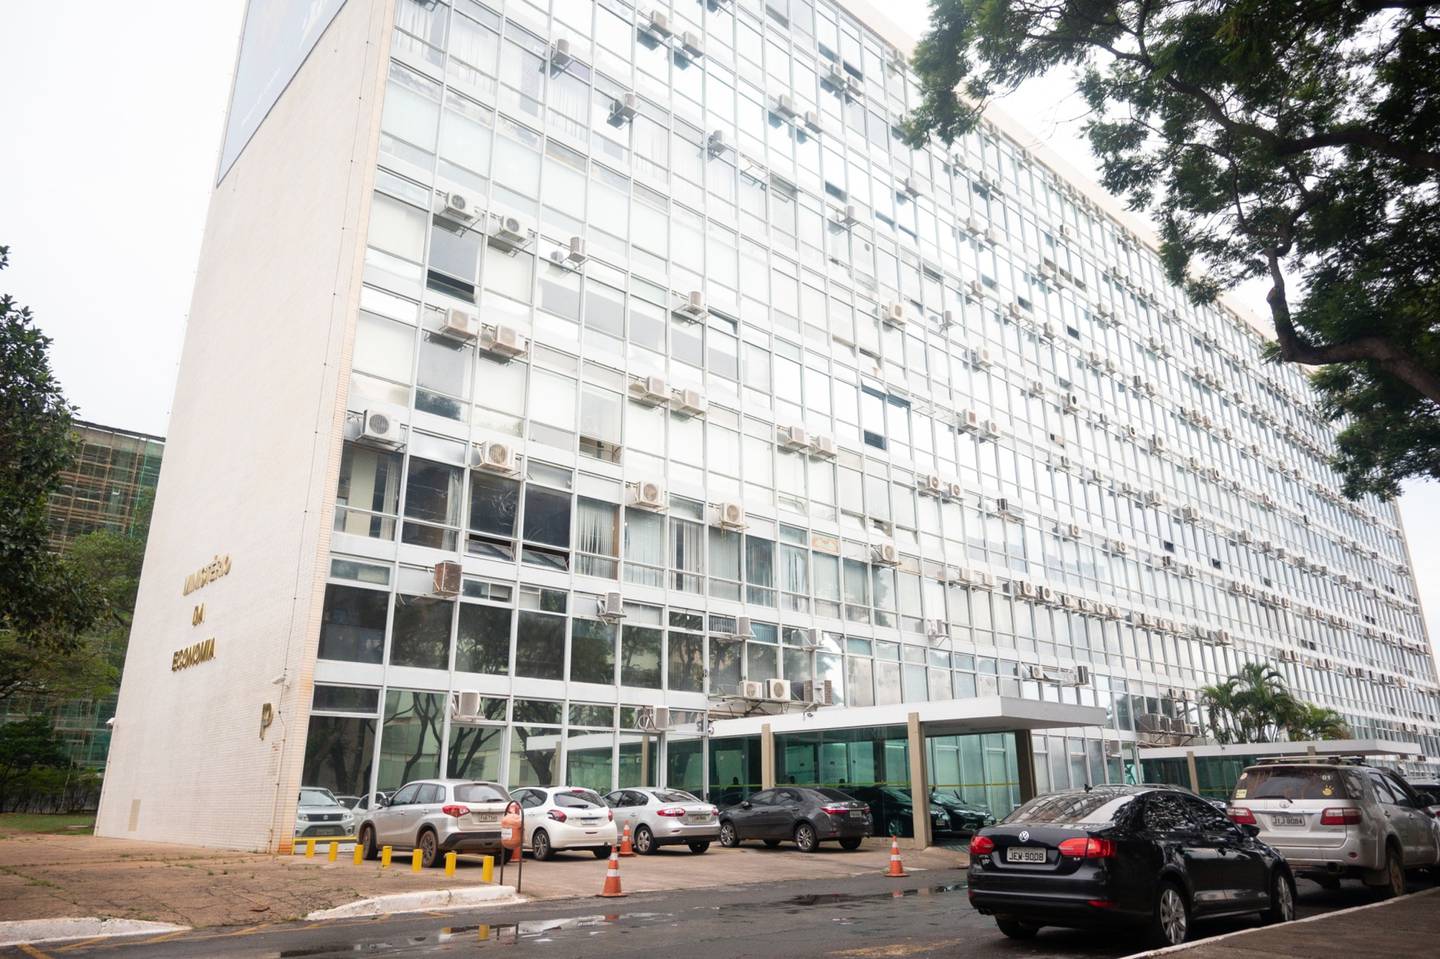 The Ministry of Economy headquarters in Brasilia.